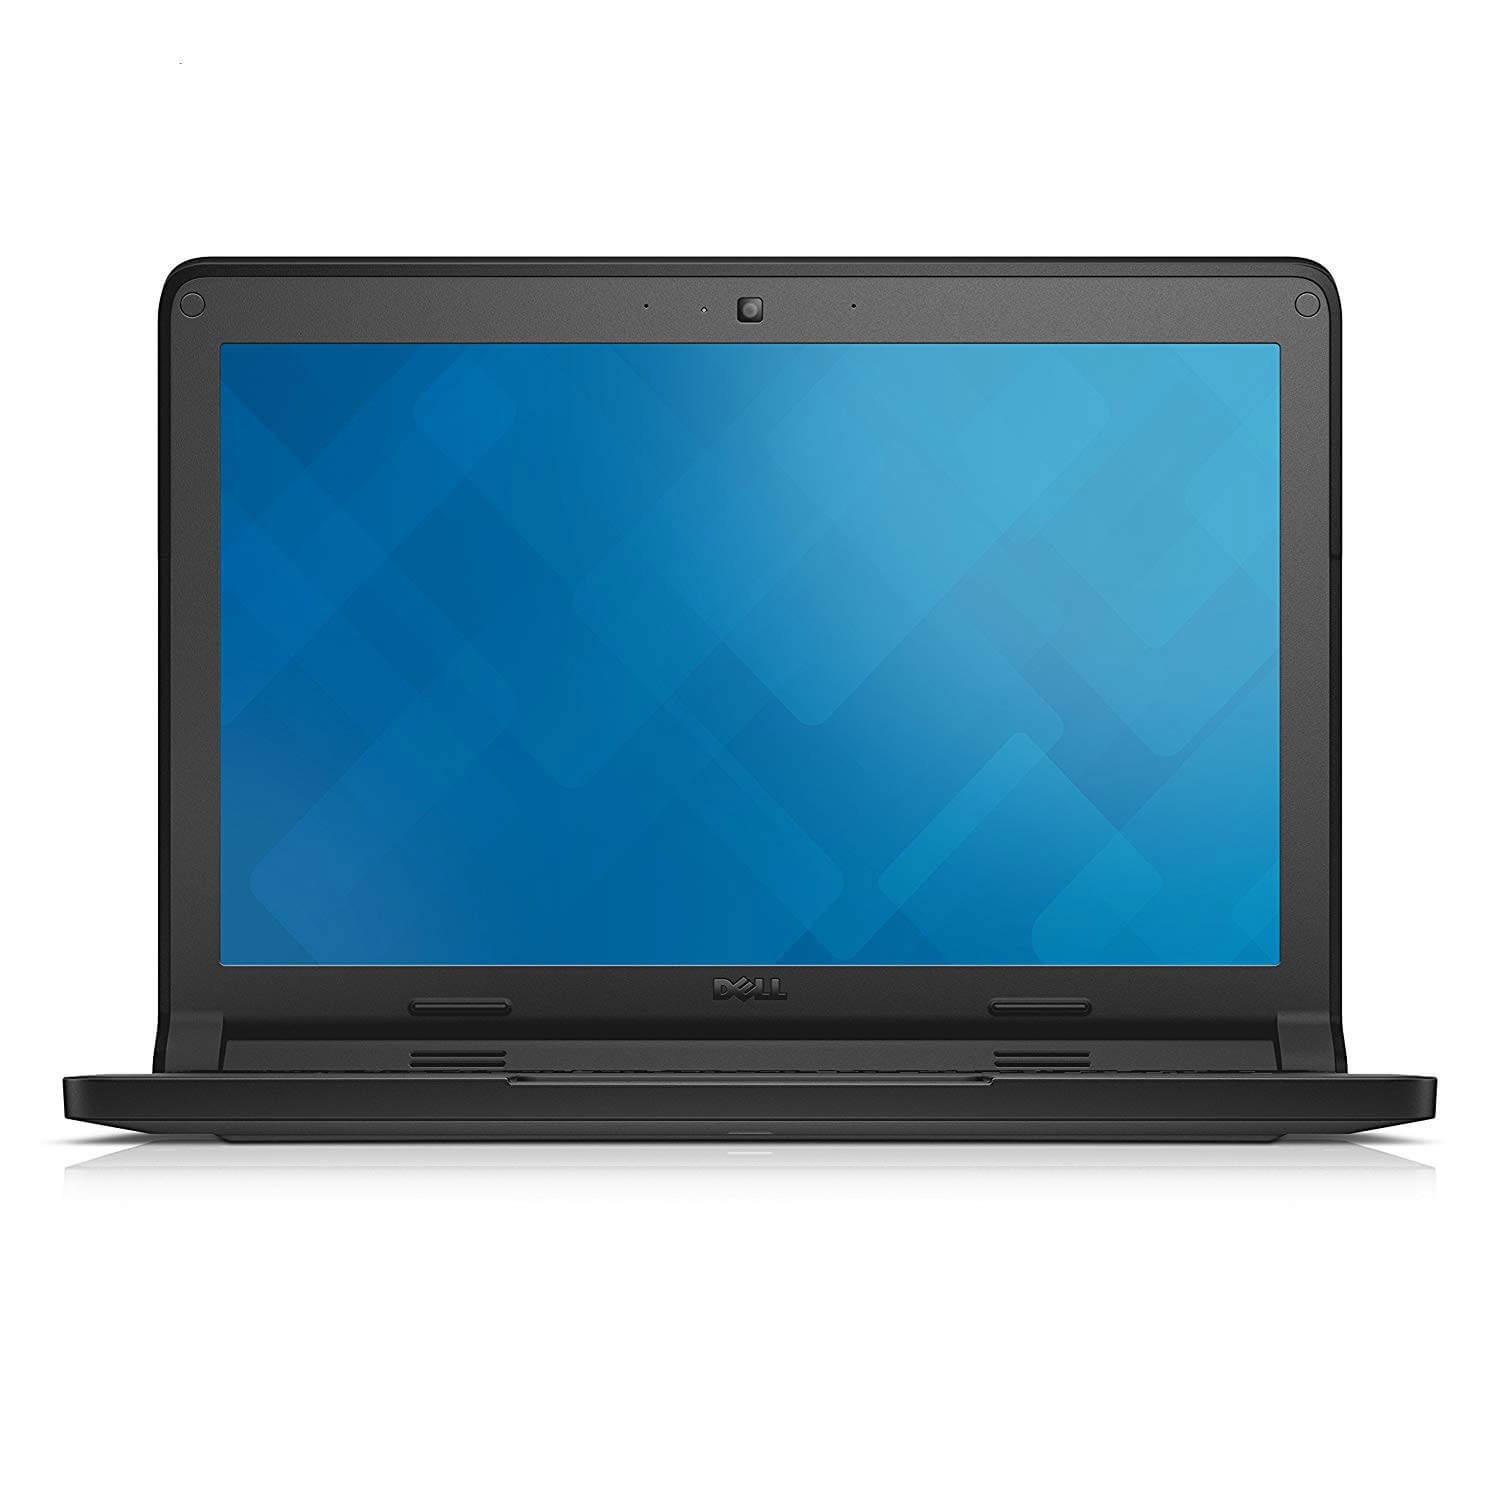 Refurbished (Good) - Dell 11 P22T 11.6" Military Grade Chromebook (Intel Celeron N2840 @ 2.16 GHz / 16GB SSD / 4GB RAM)